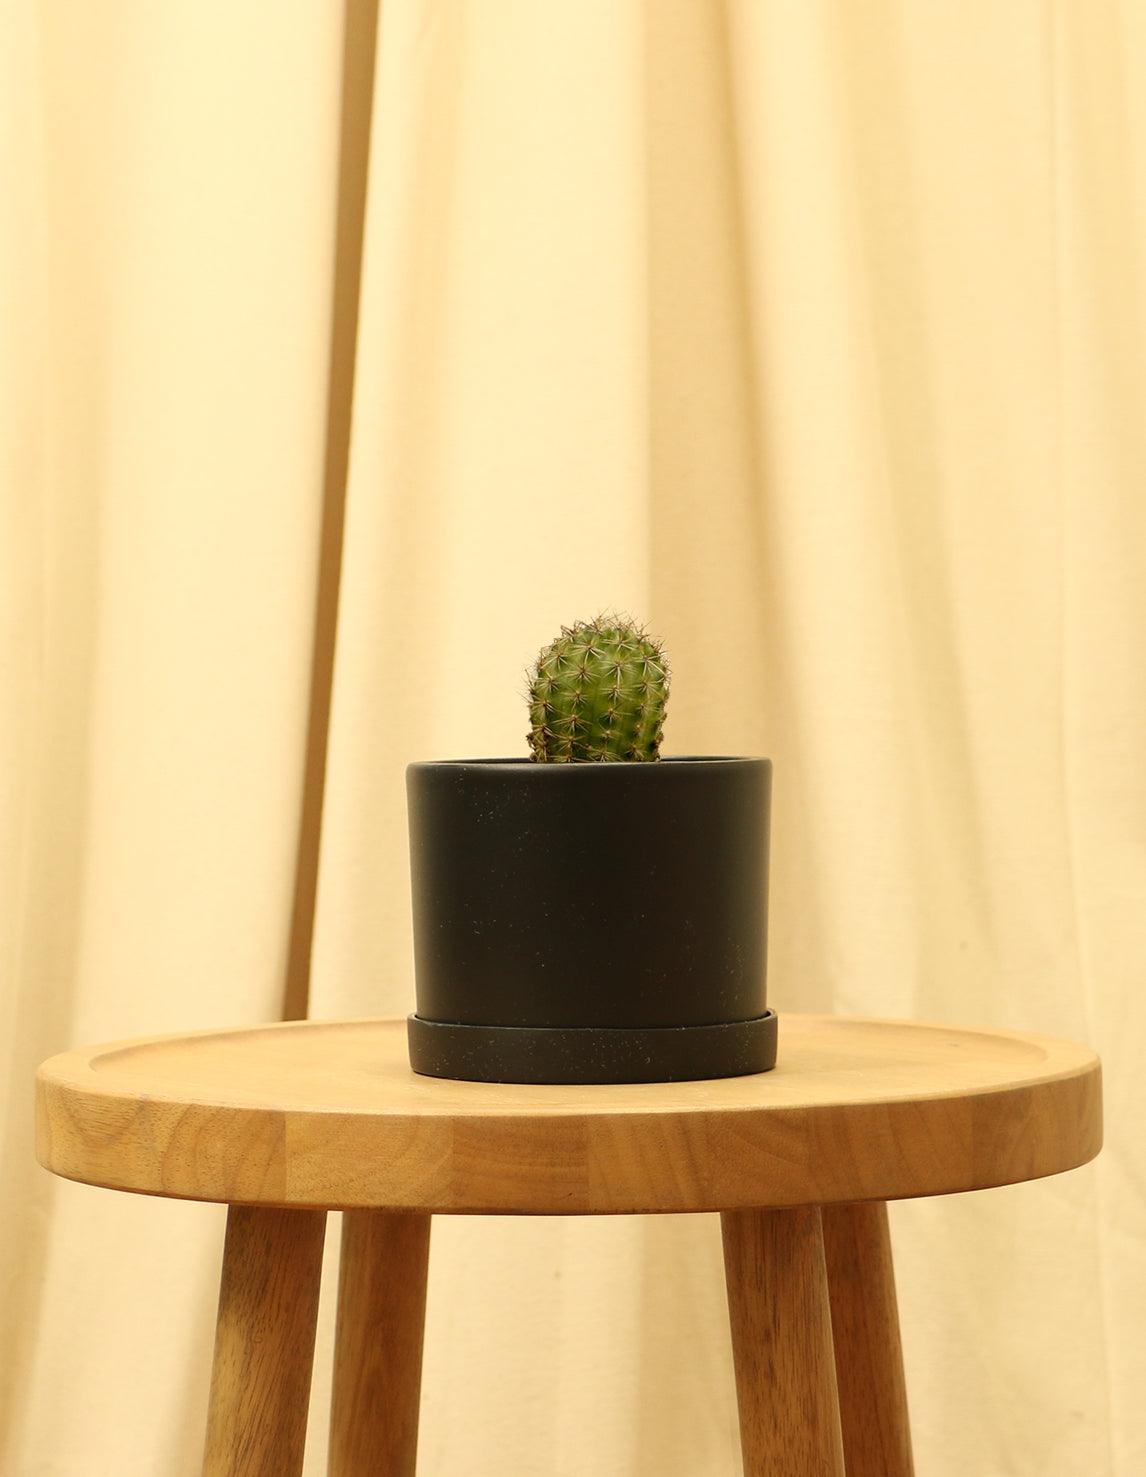 Small Torch Cactus in black pot.